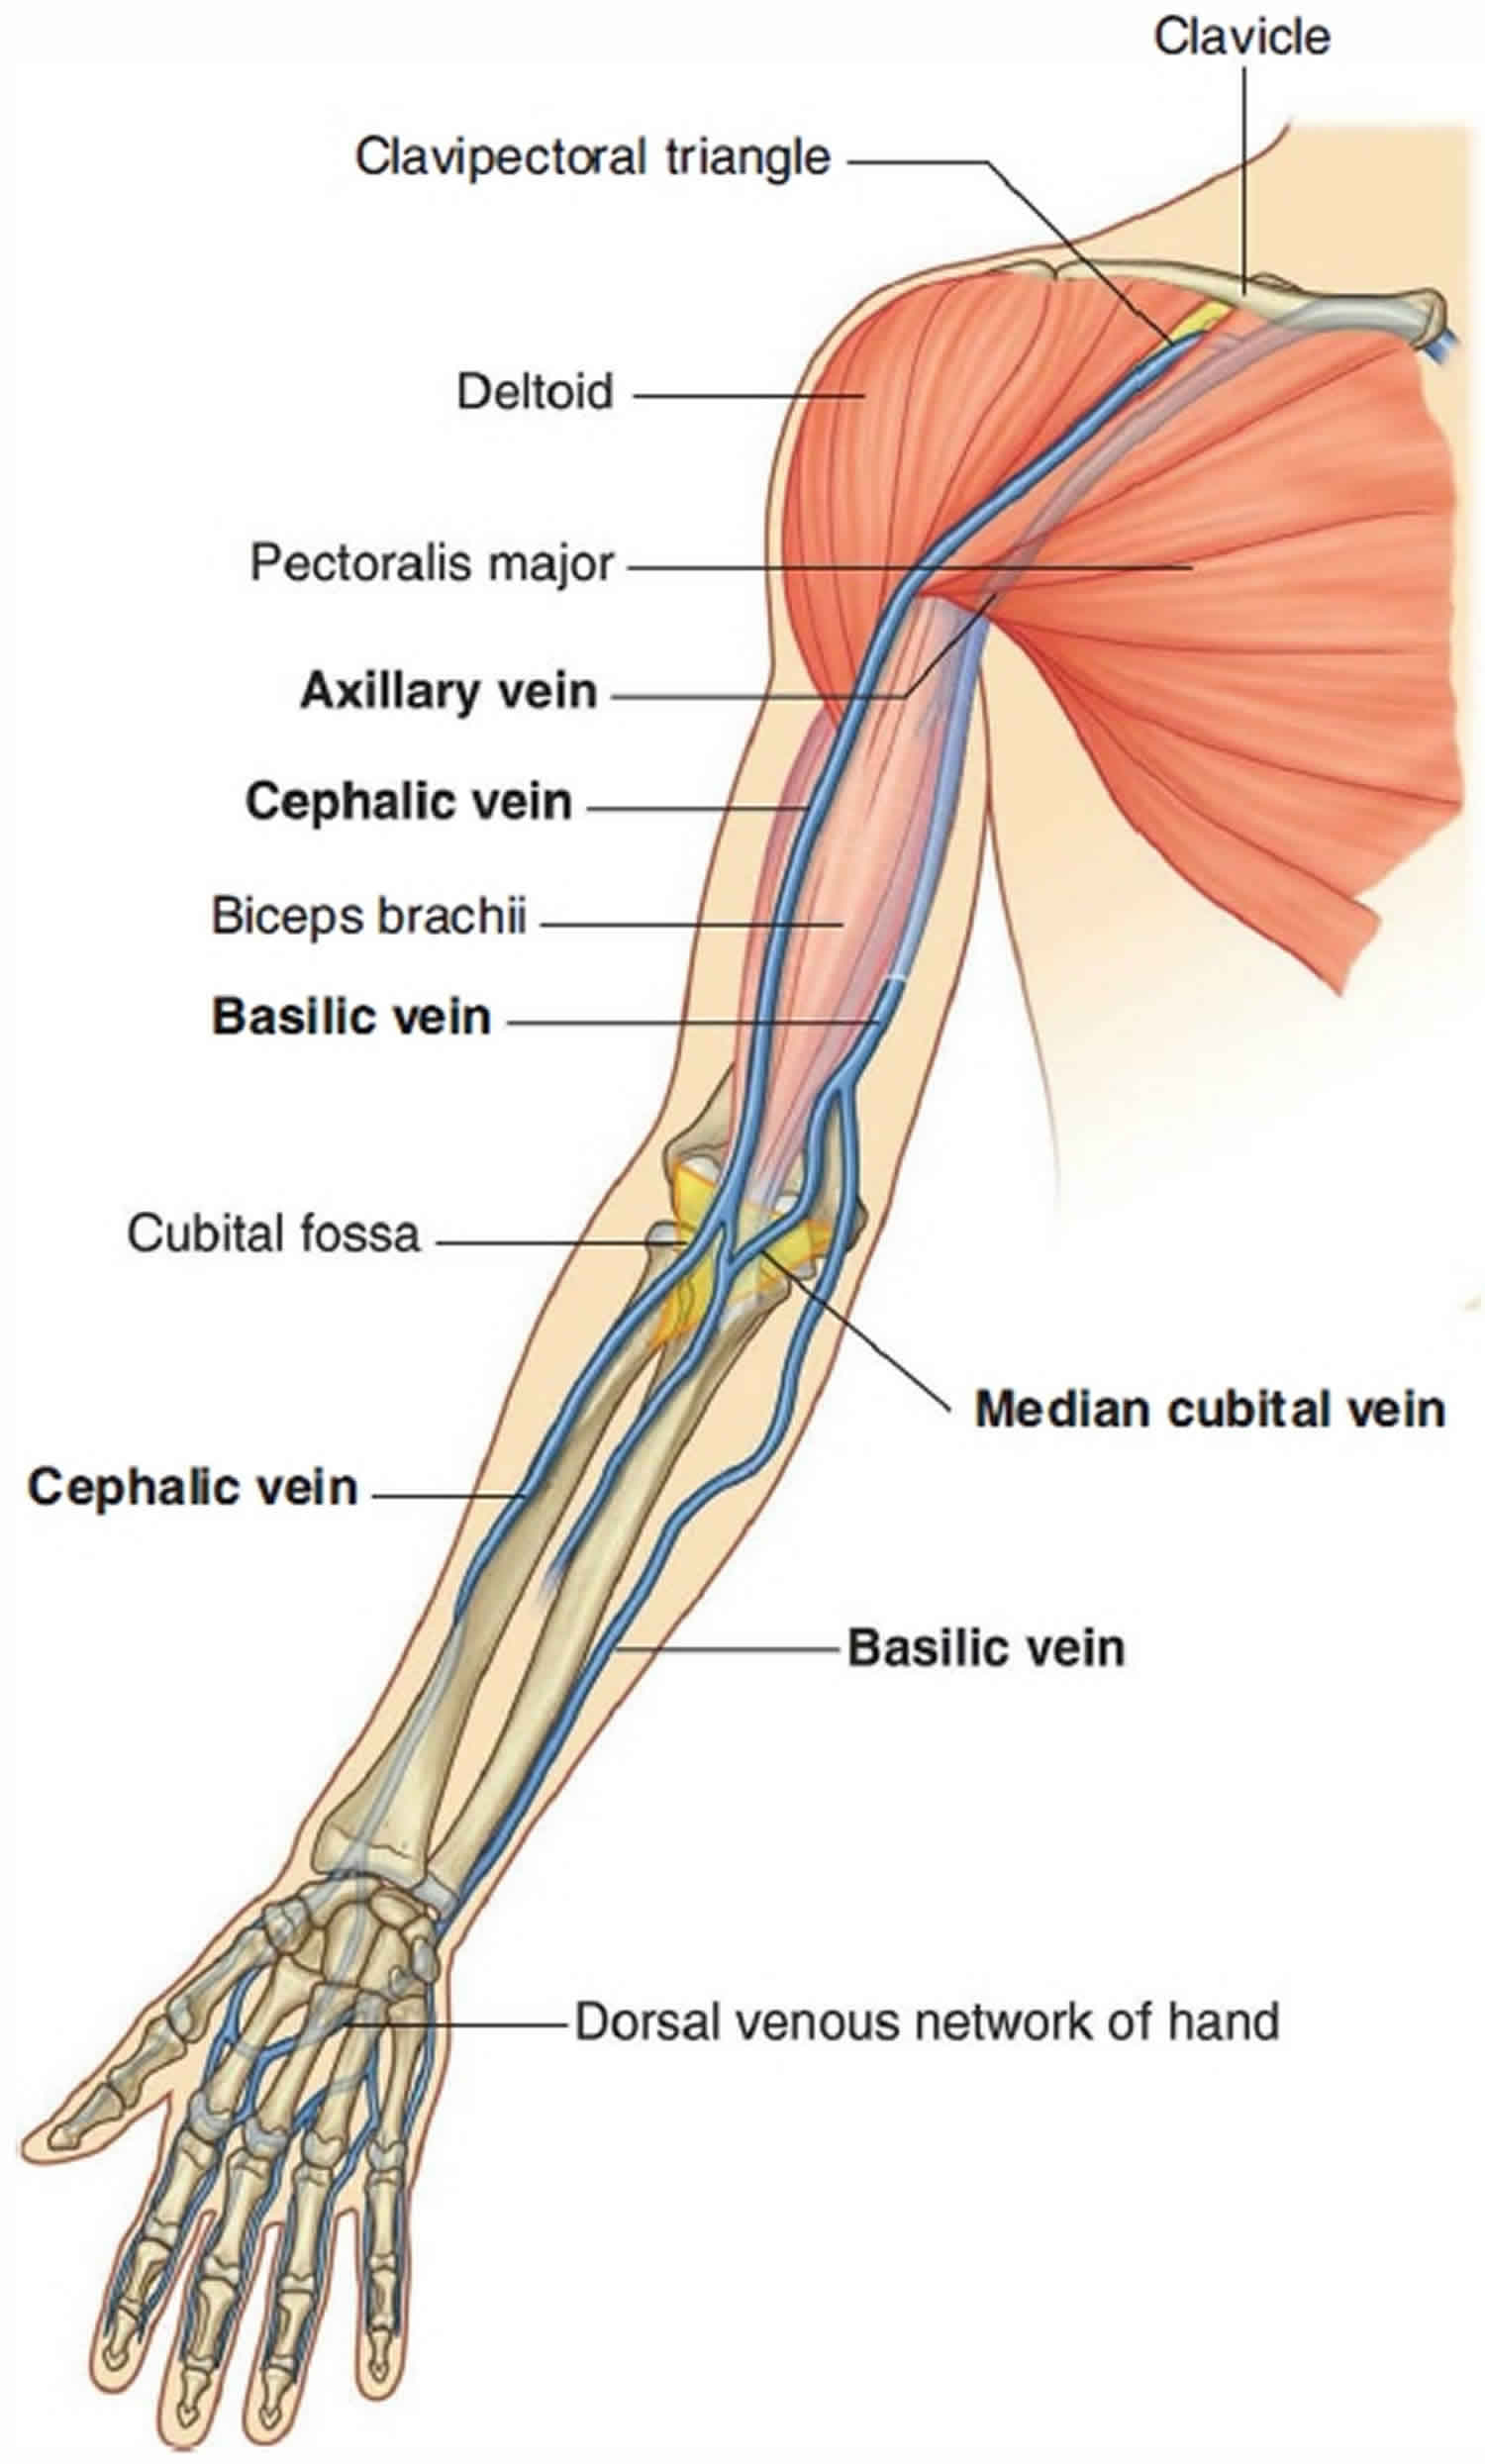 venipuncture-procedure-venipuncture-sites-veins-venipuncture